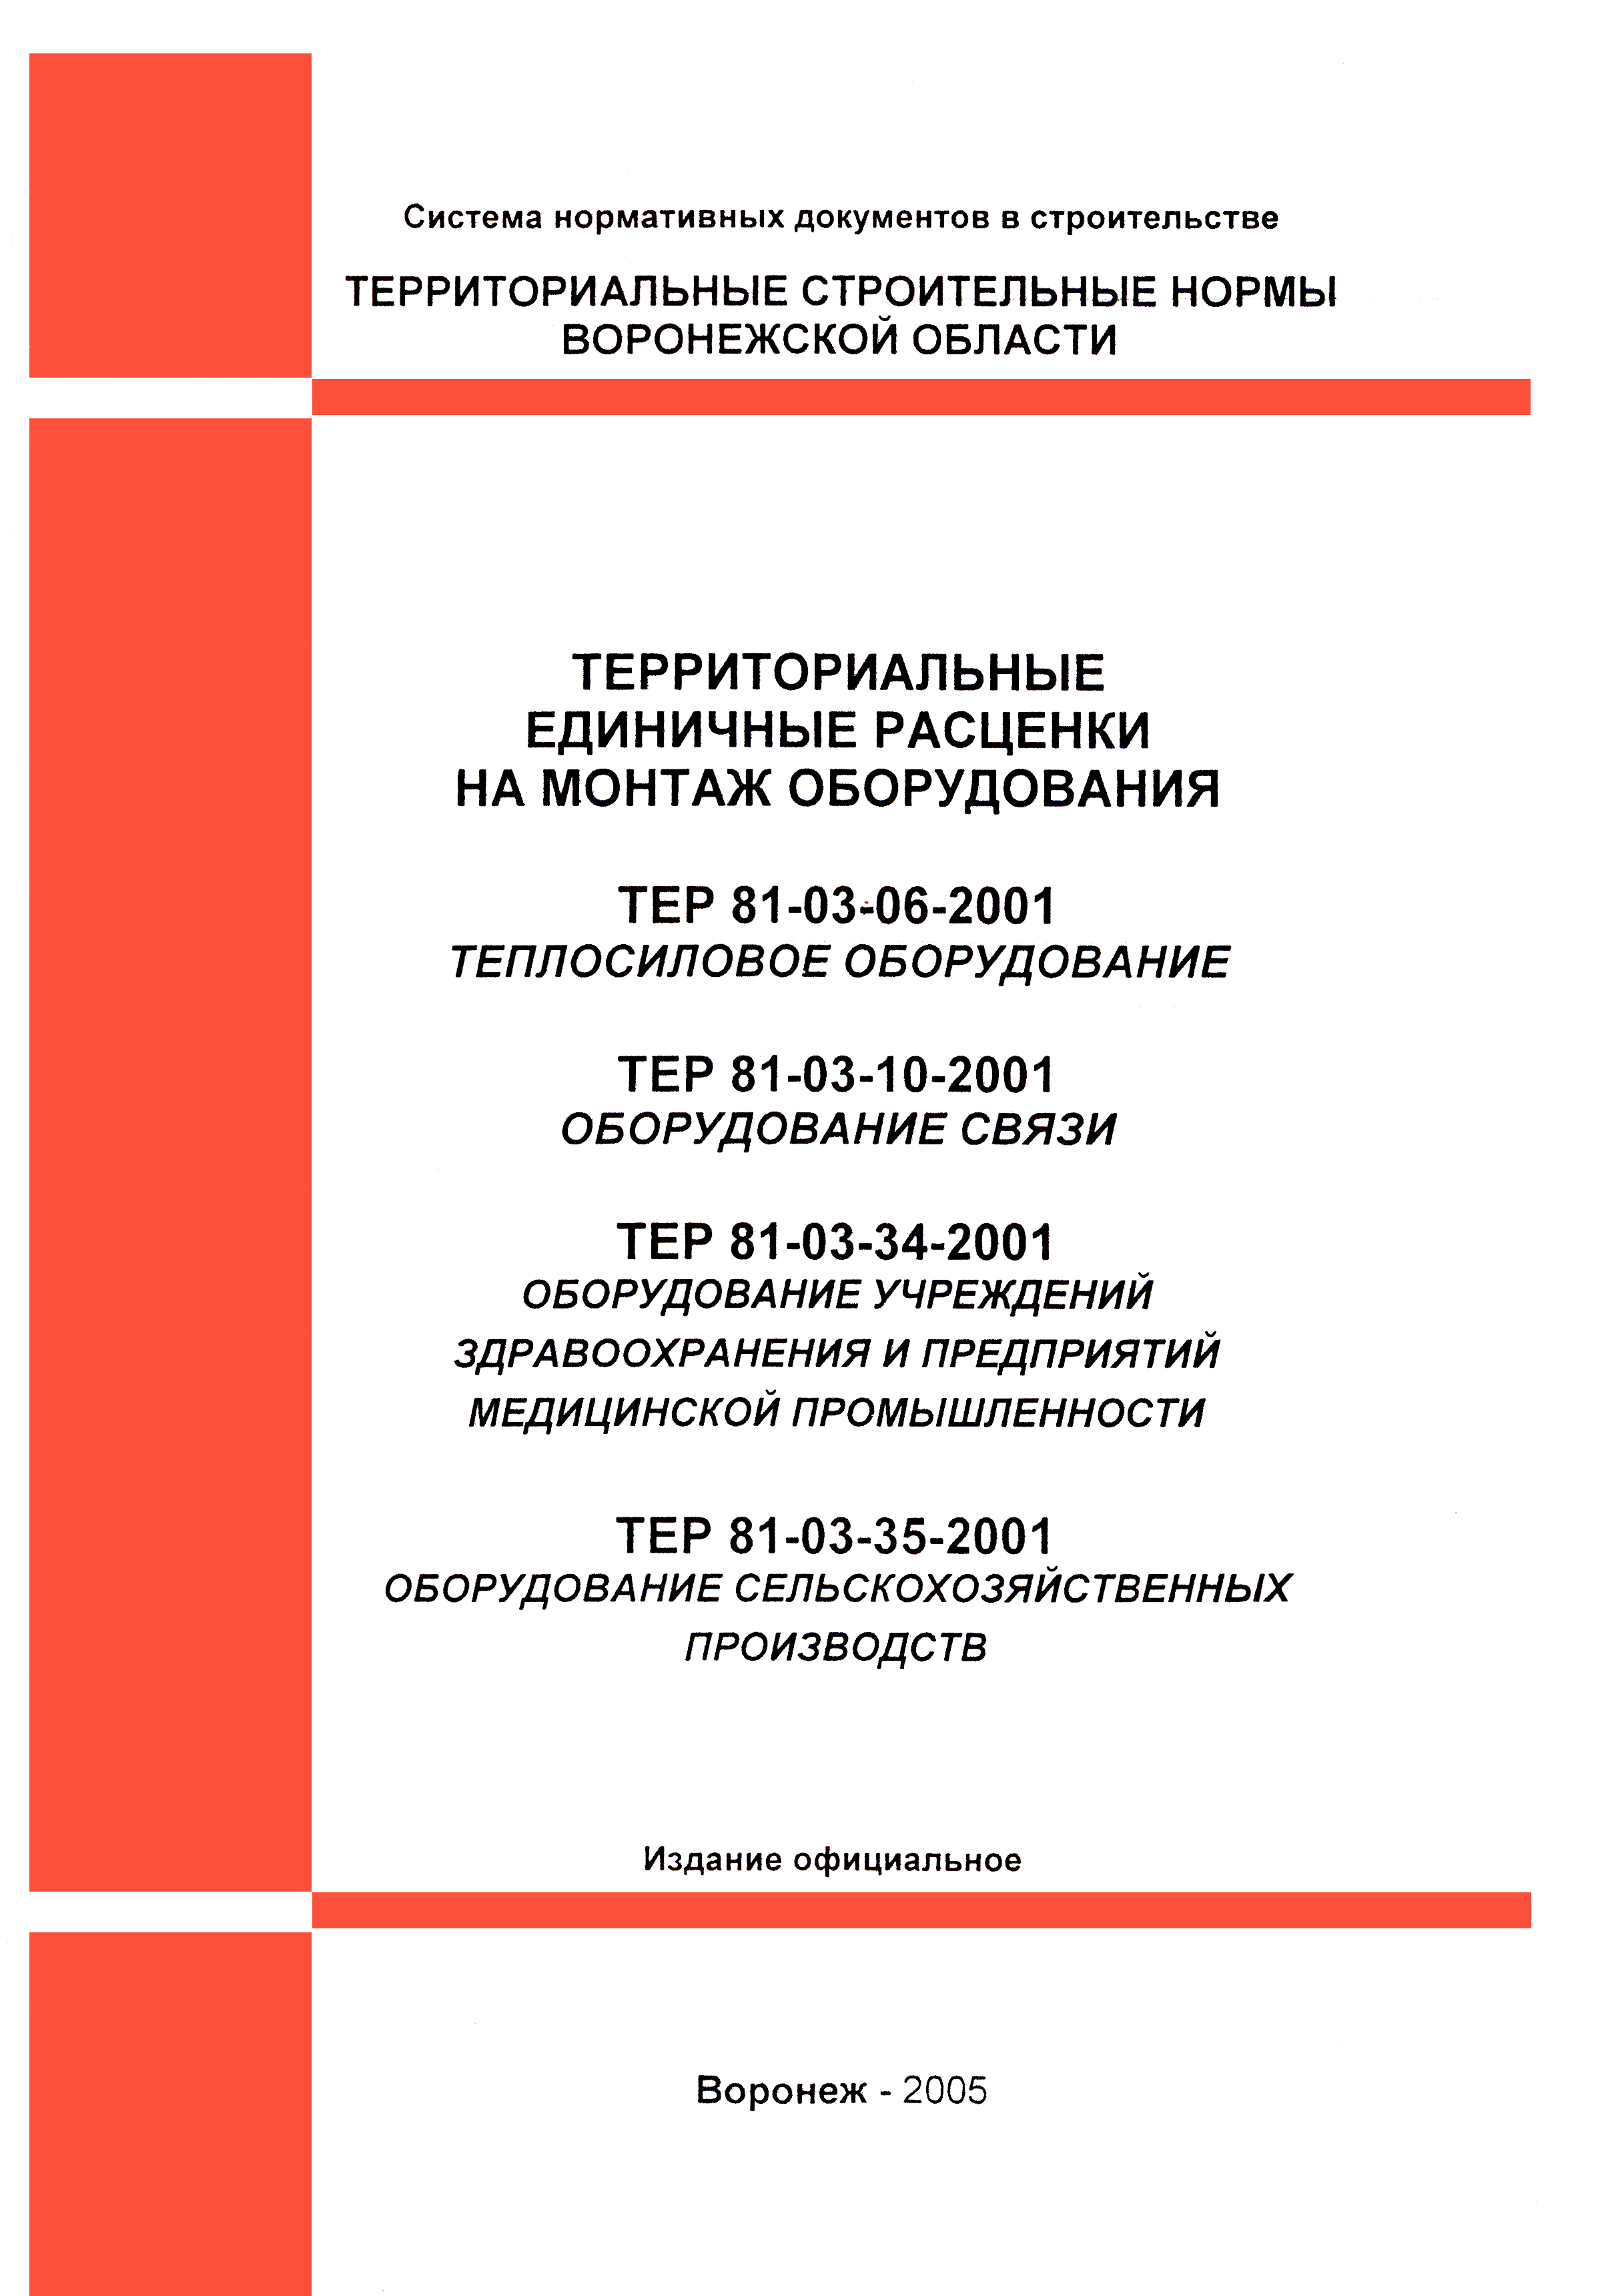 ТЕРм Воронежской области 81-03-06-2001